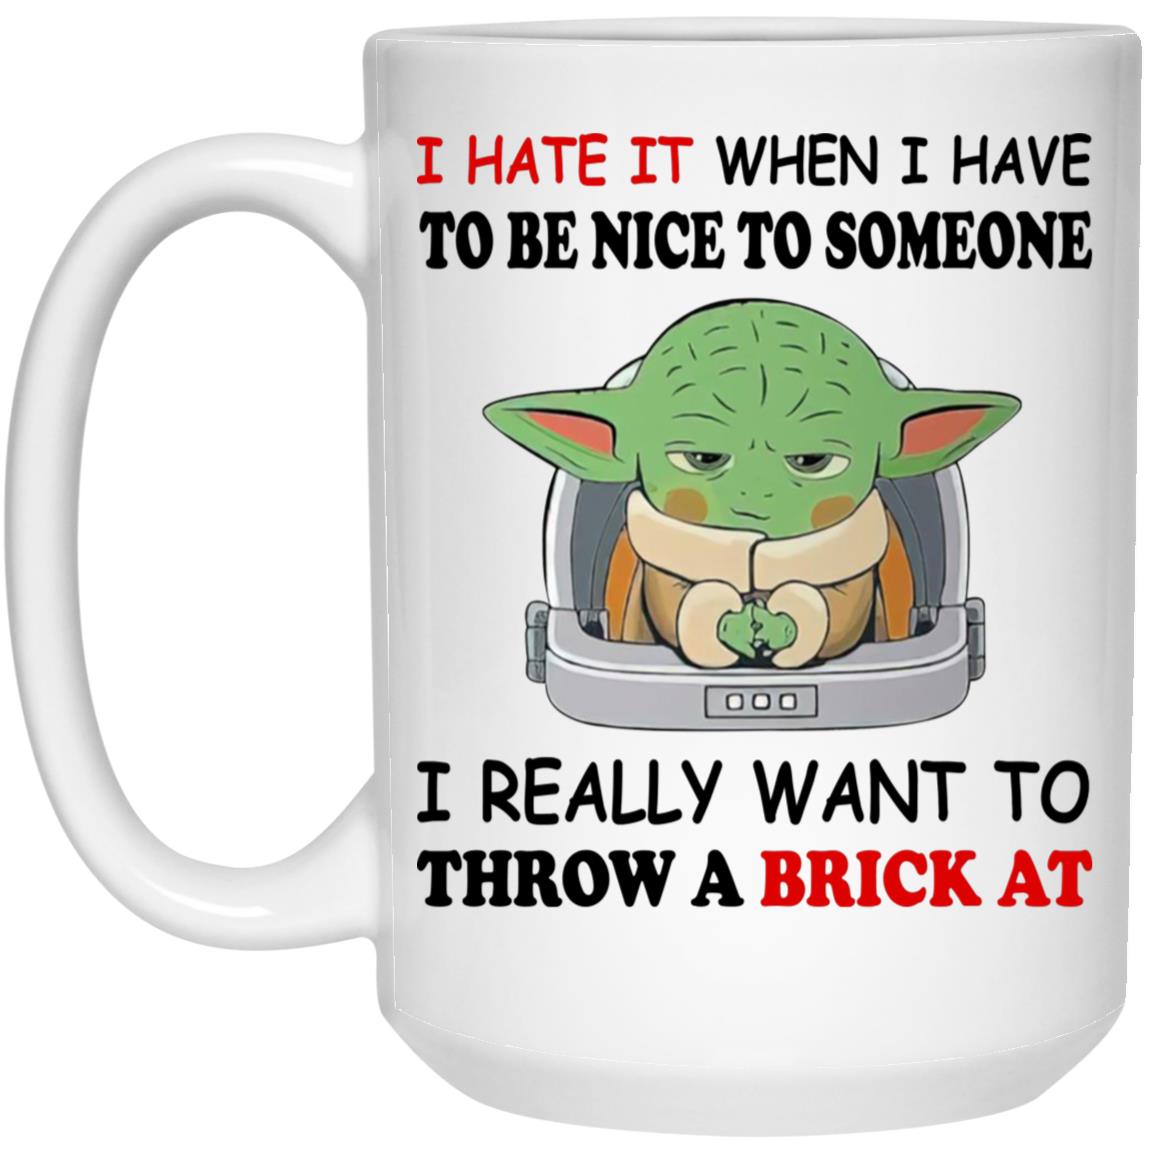 Baby Yoda I Need A Job That Isn't Too Jobby Meme White Mug